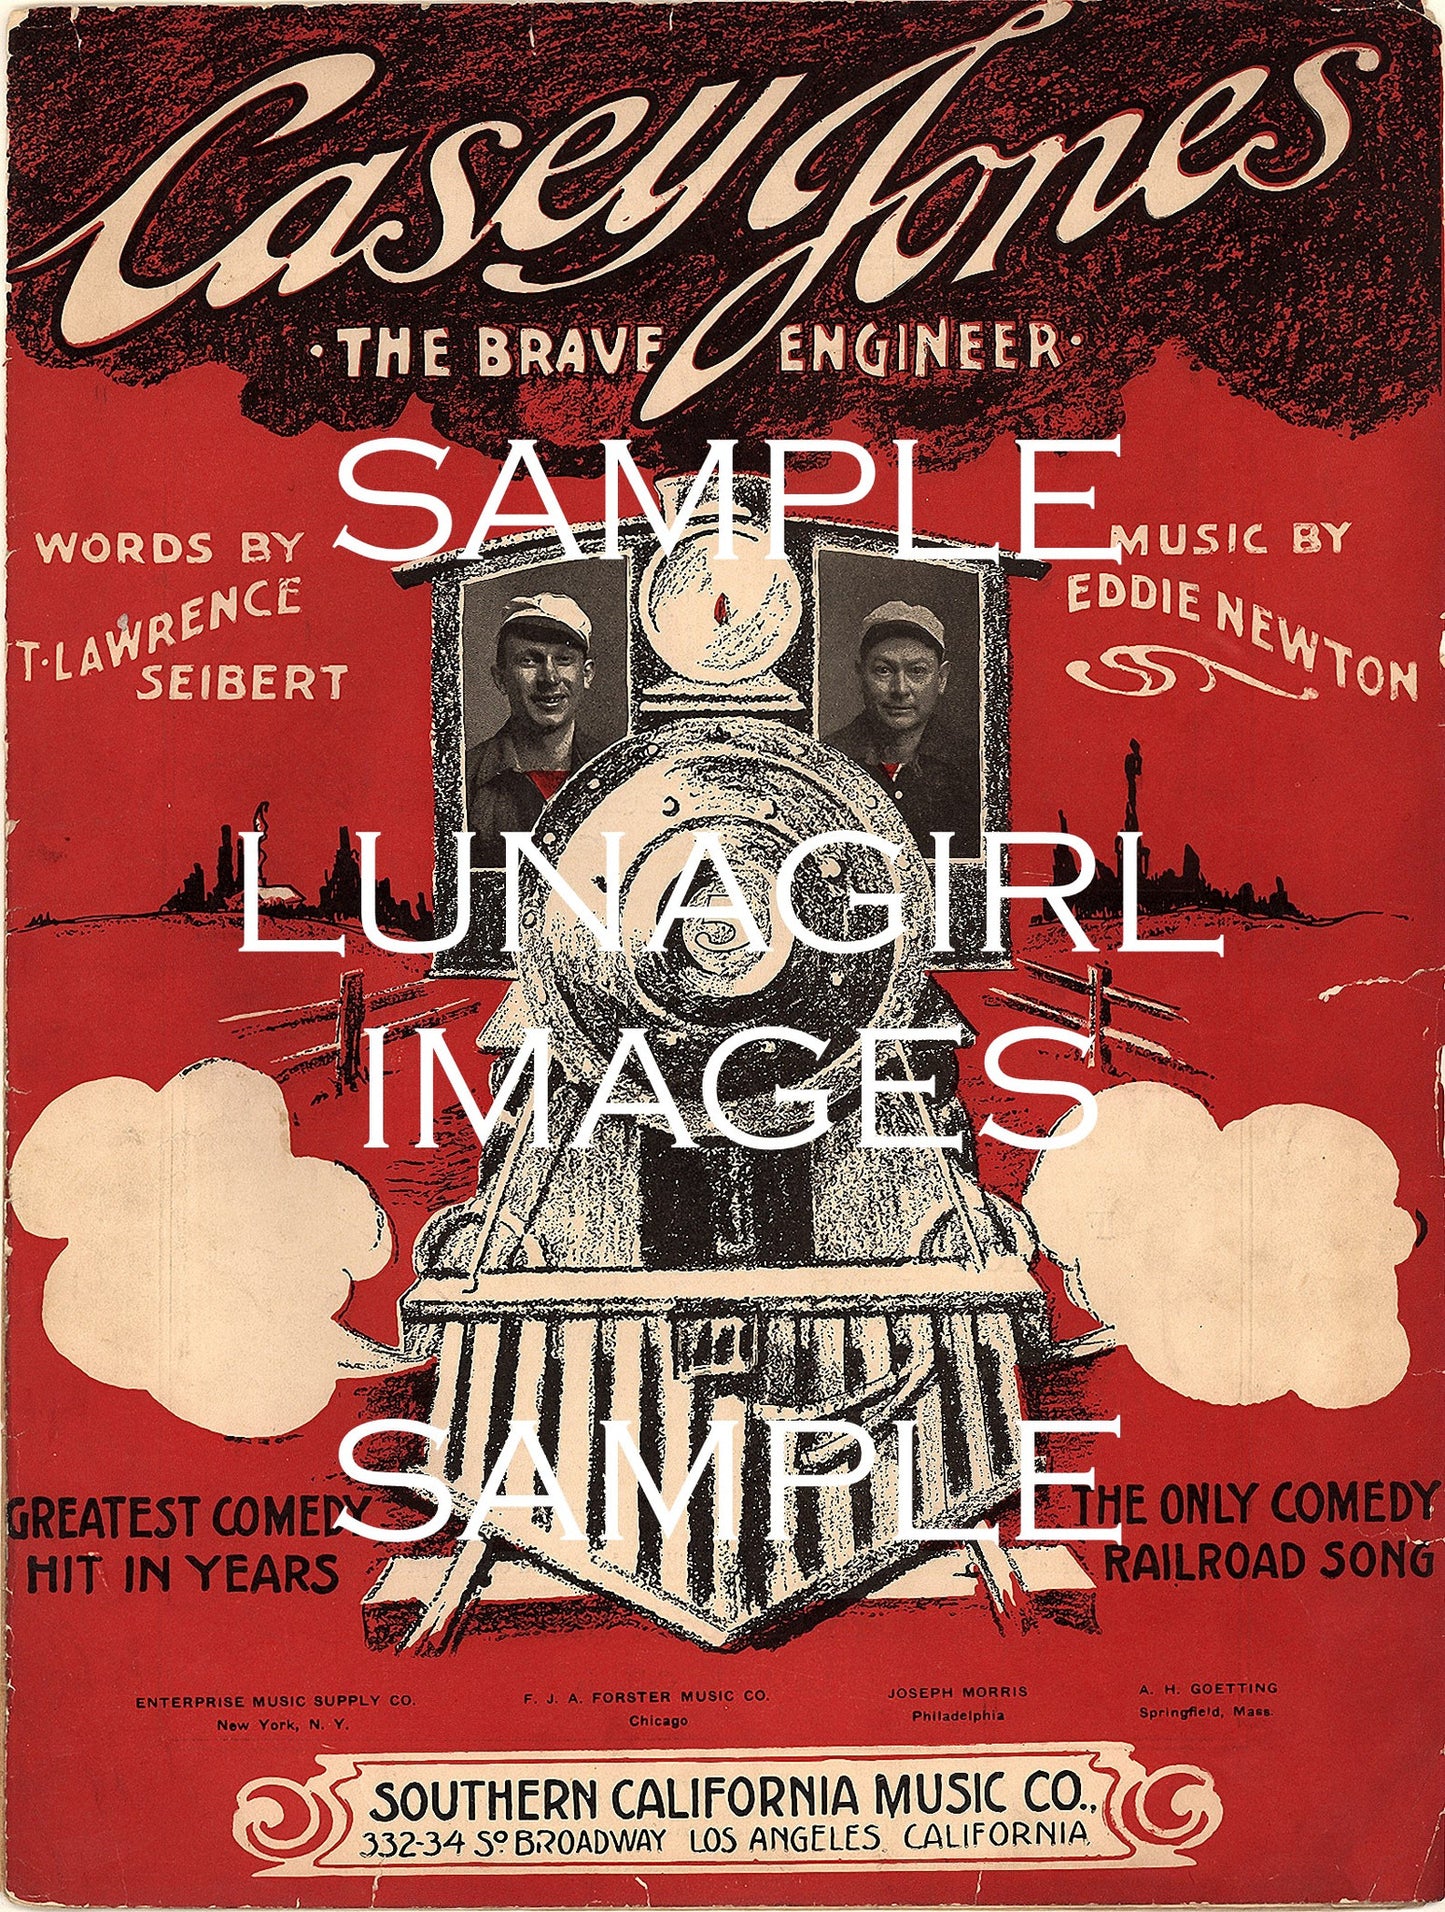 Vintage Sheet Music Covers & Pages: 800 Images - Lunagirl